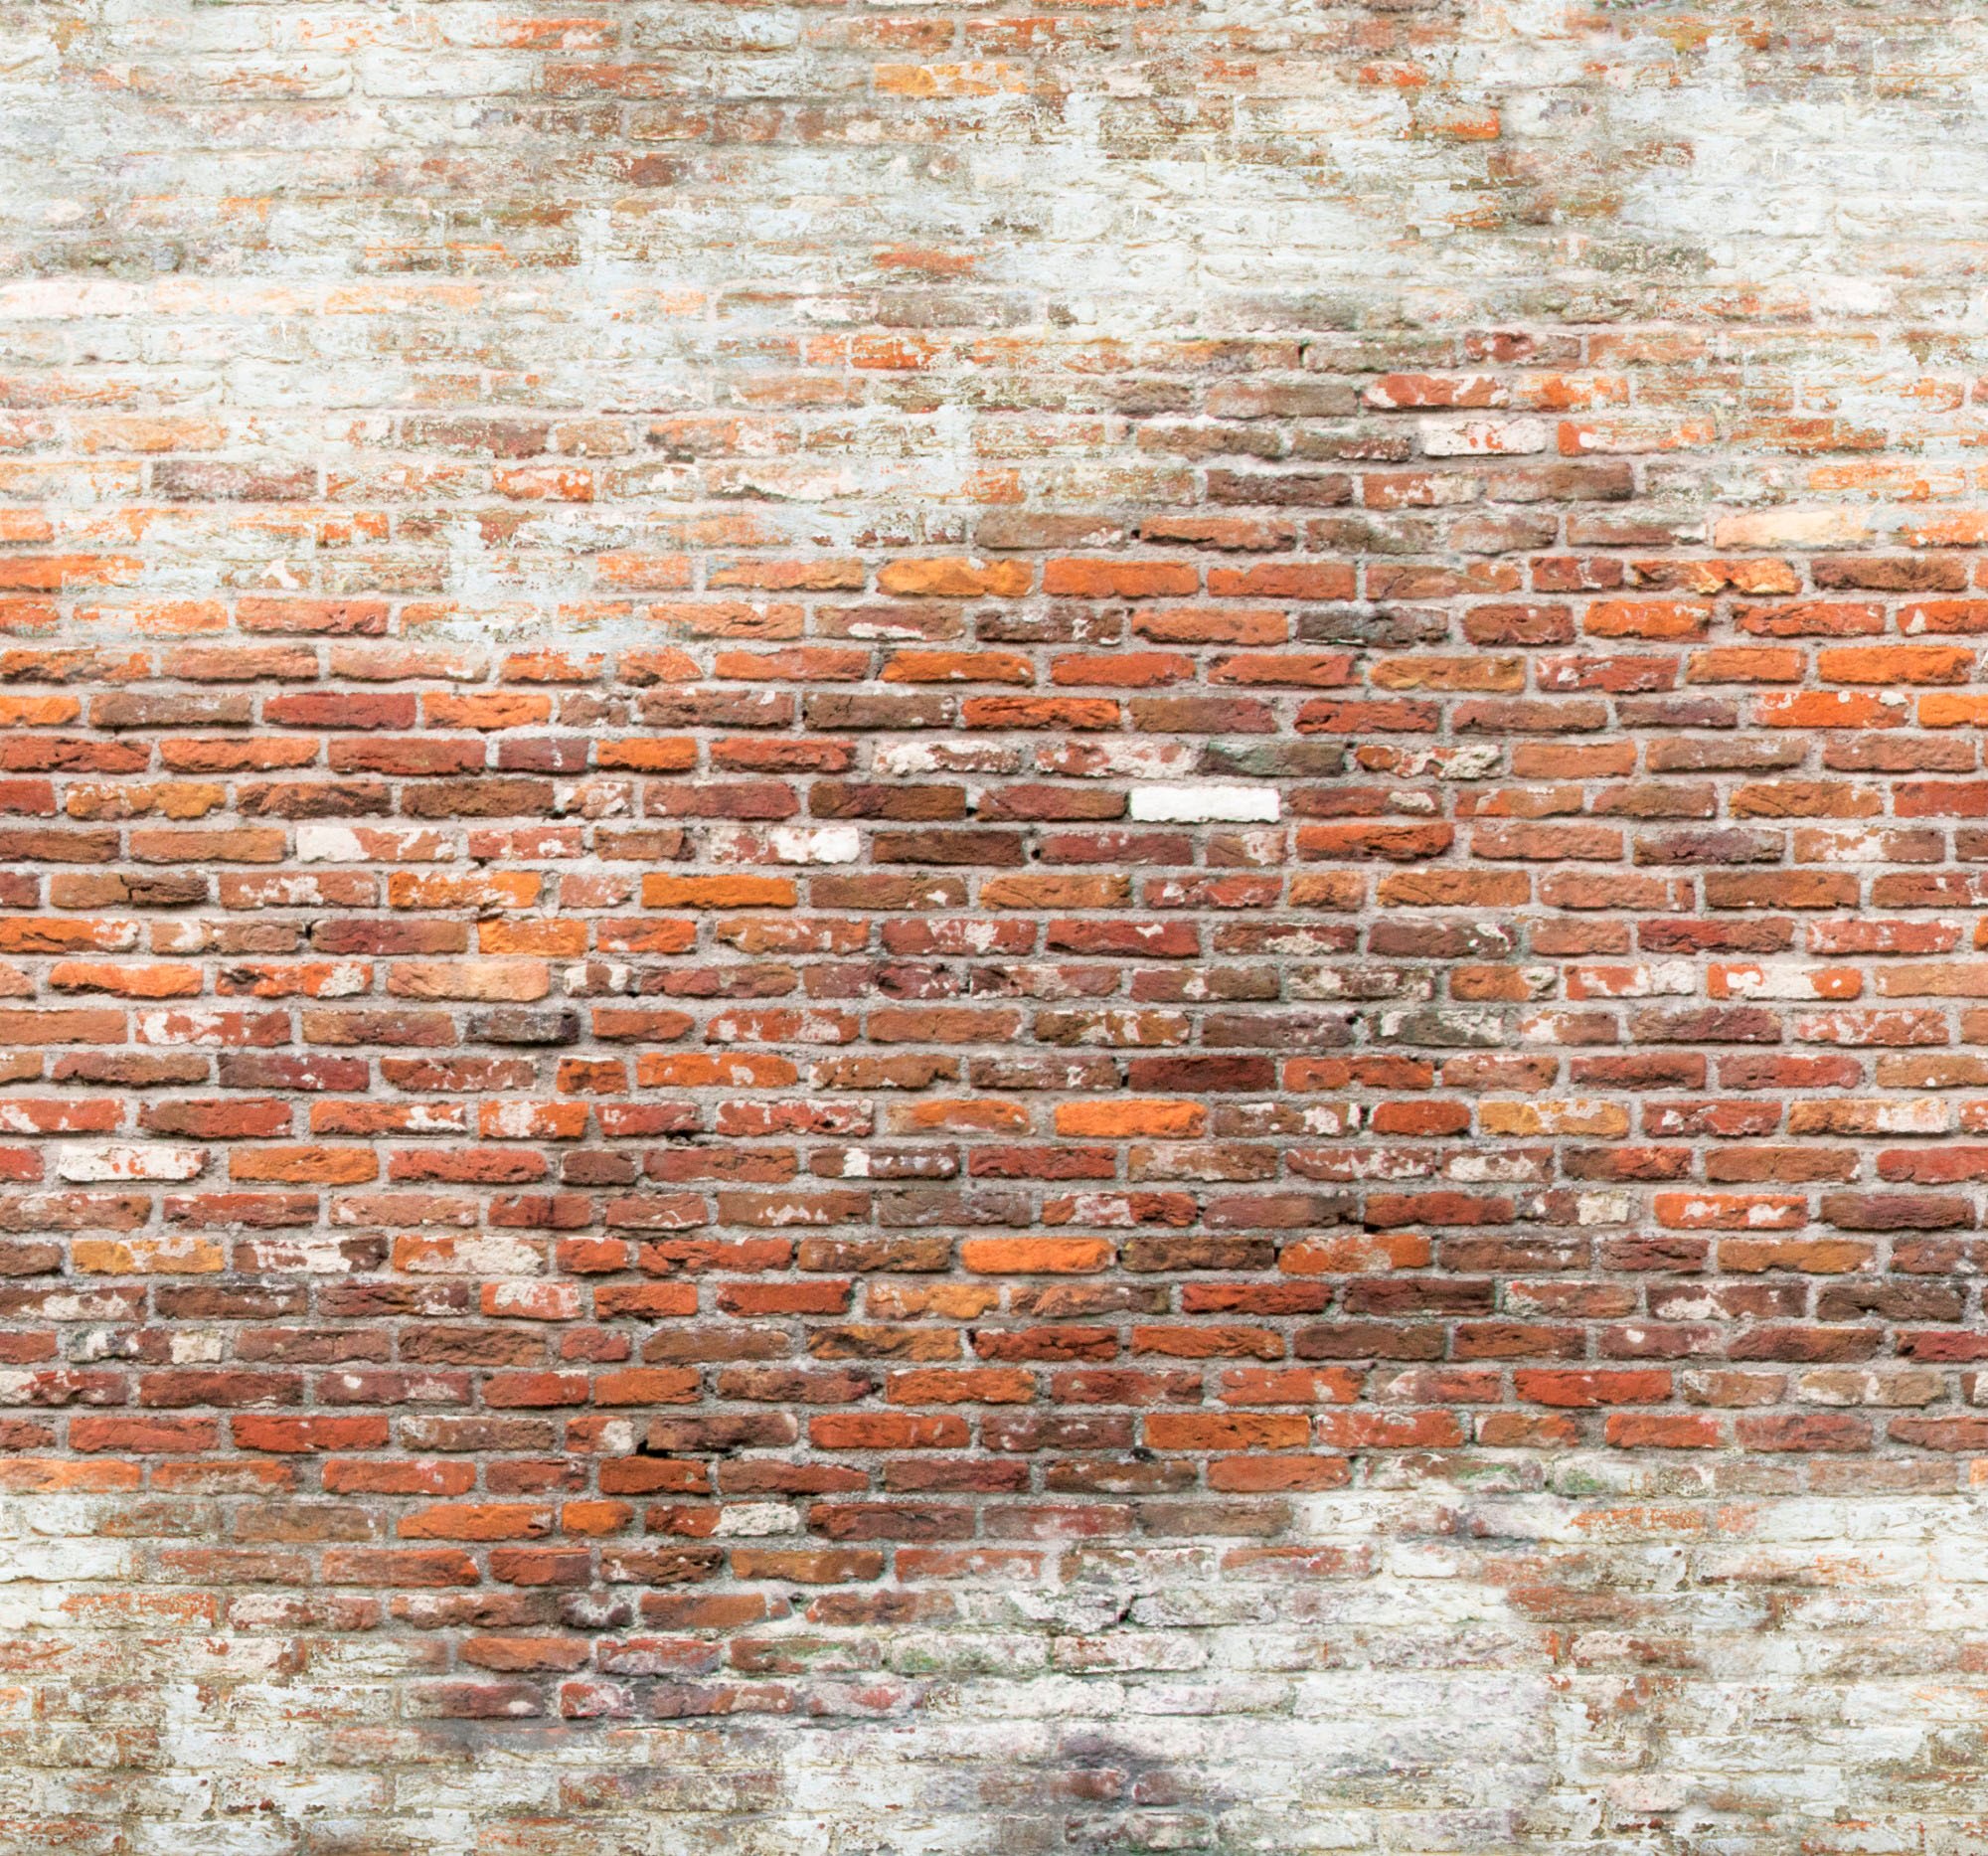 Art for the home Fototapetas »Brick wall 2« 300 cm Läng...